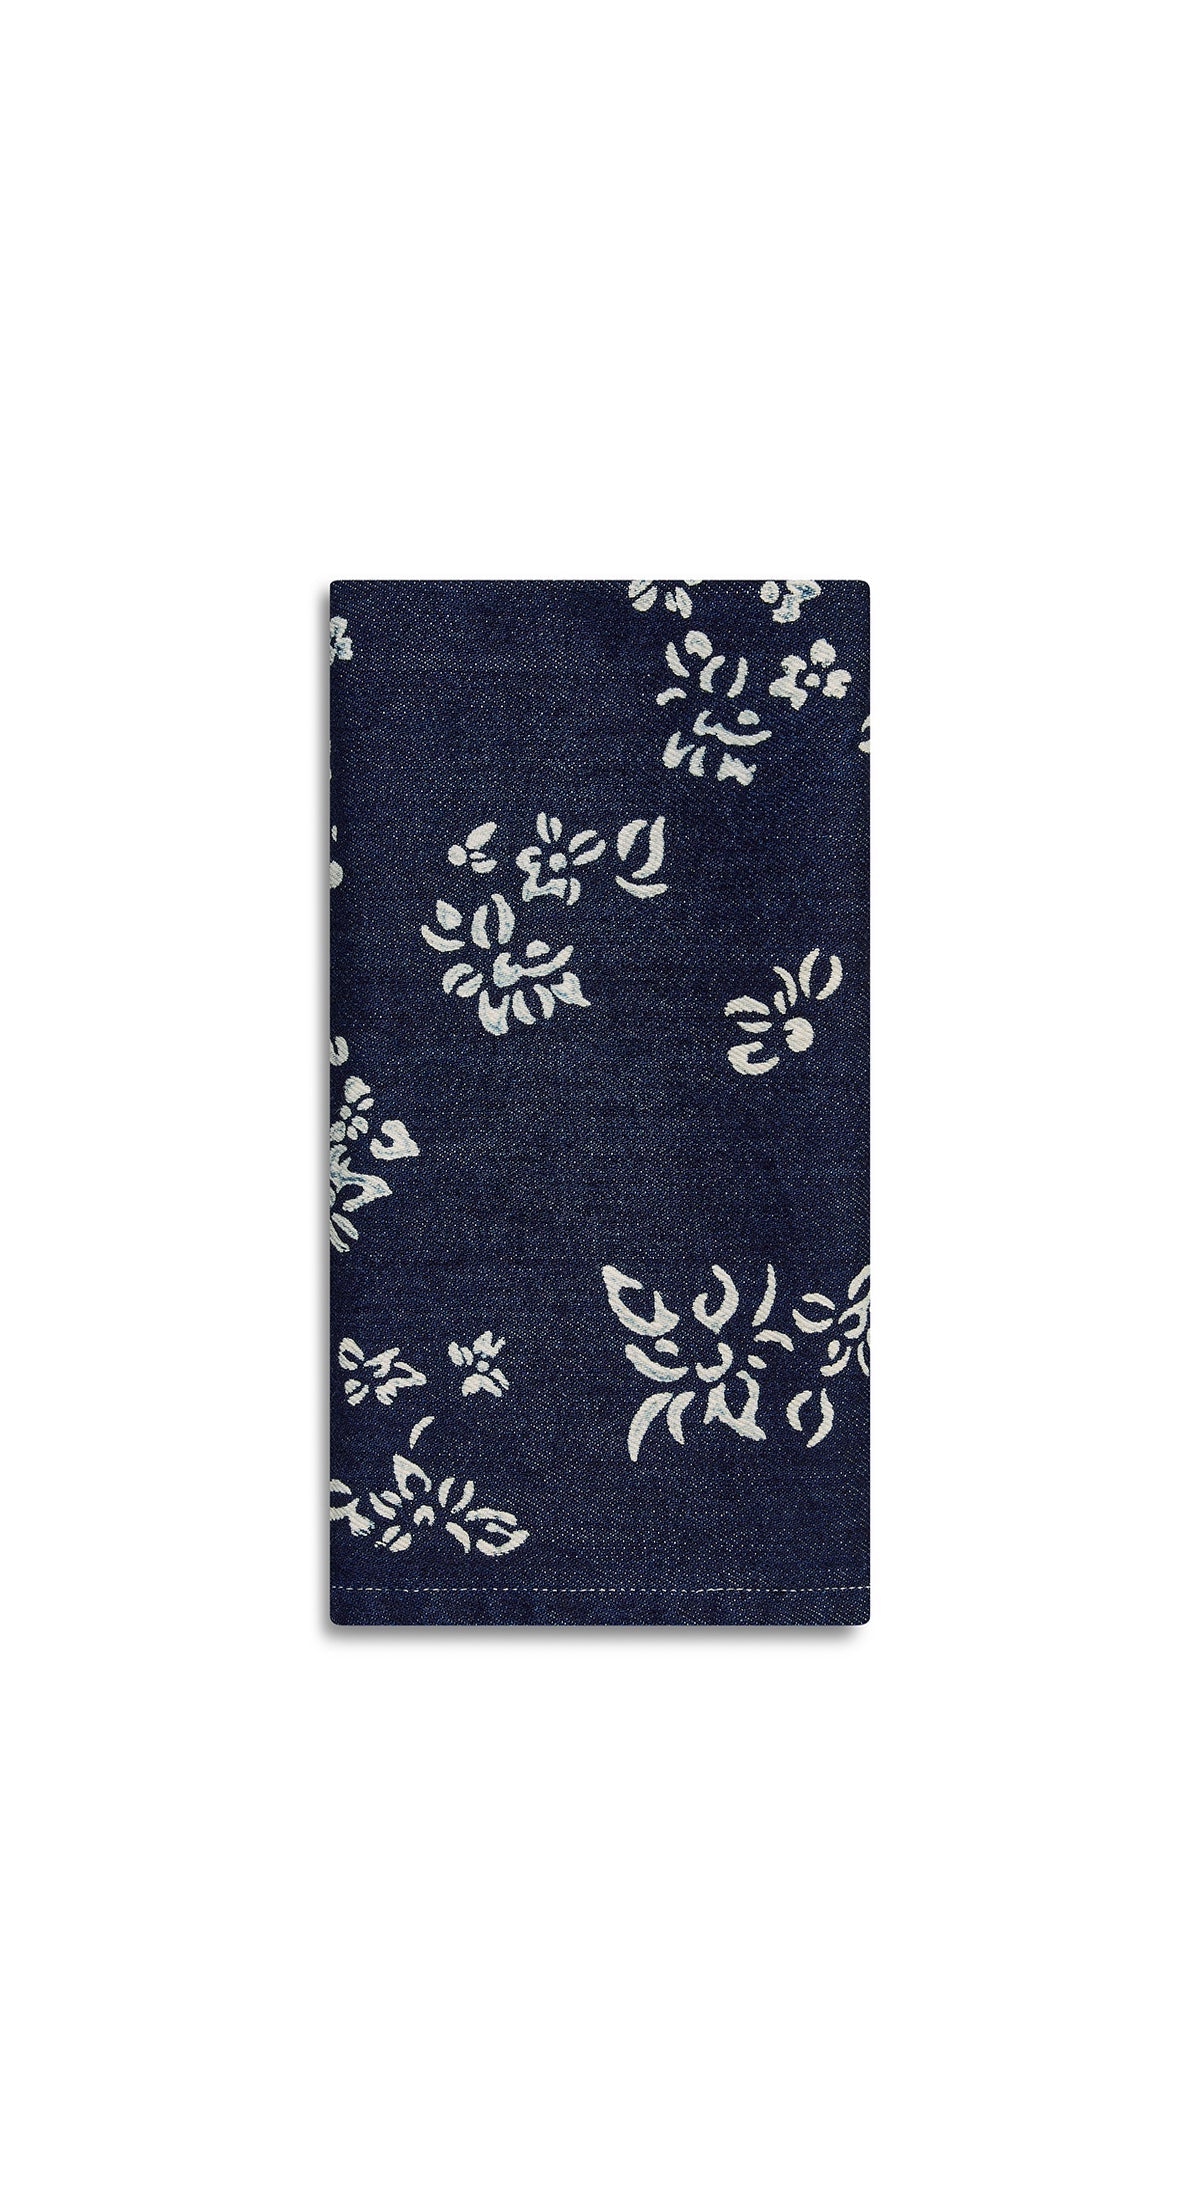 Bernadette's Hand Stamped Falling Flower on Denim Napkin in Deep Blue, 50x50cm